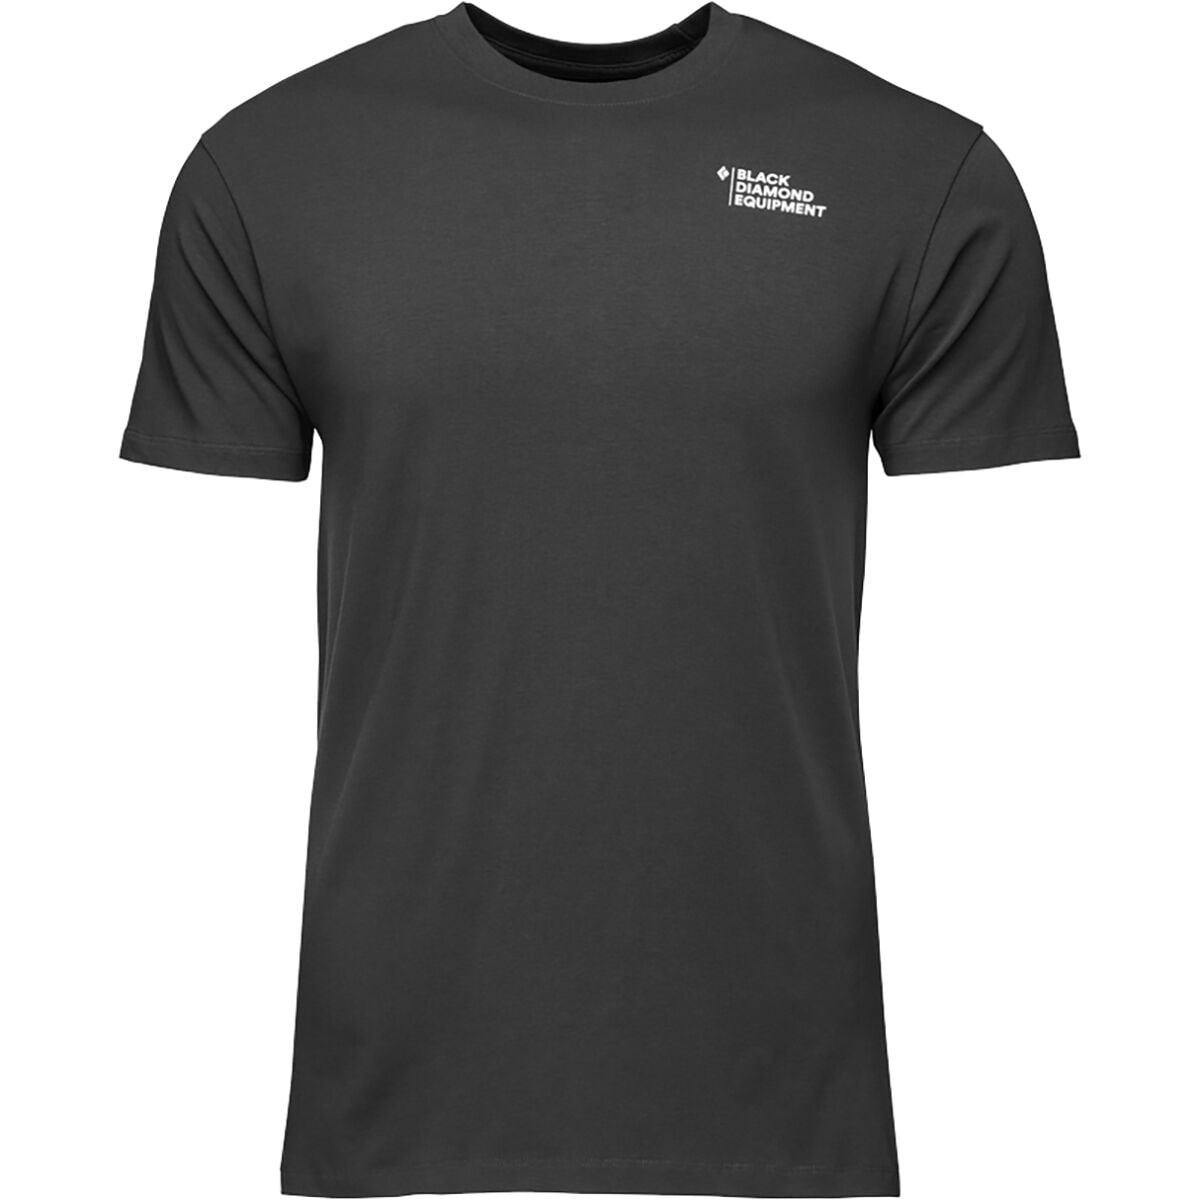 Black Diamond Heritage Equipment Short-Sleeve T-Shirt - Men's